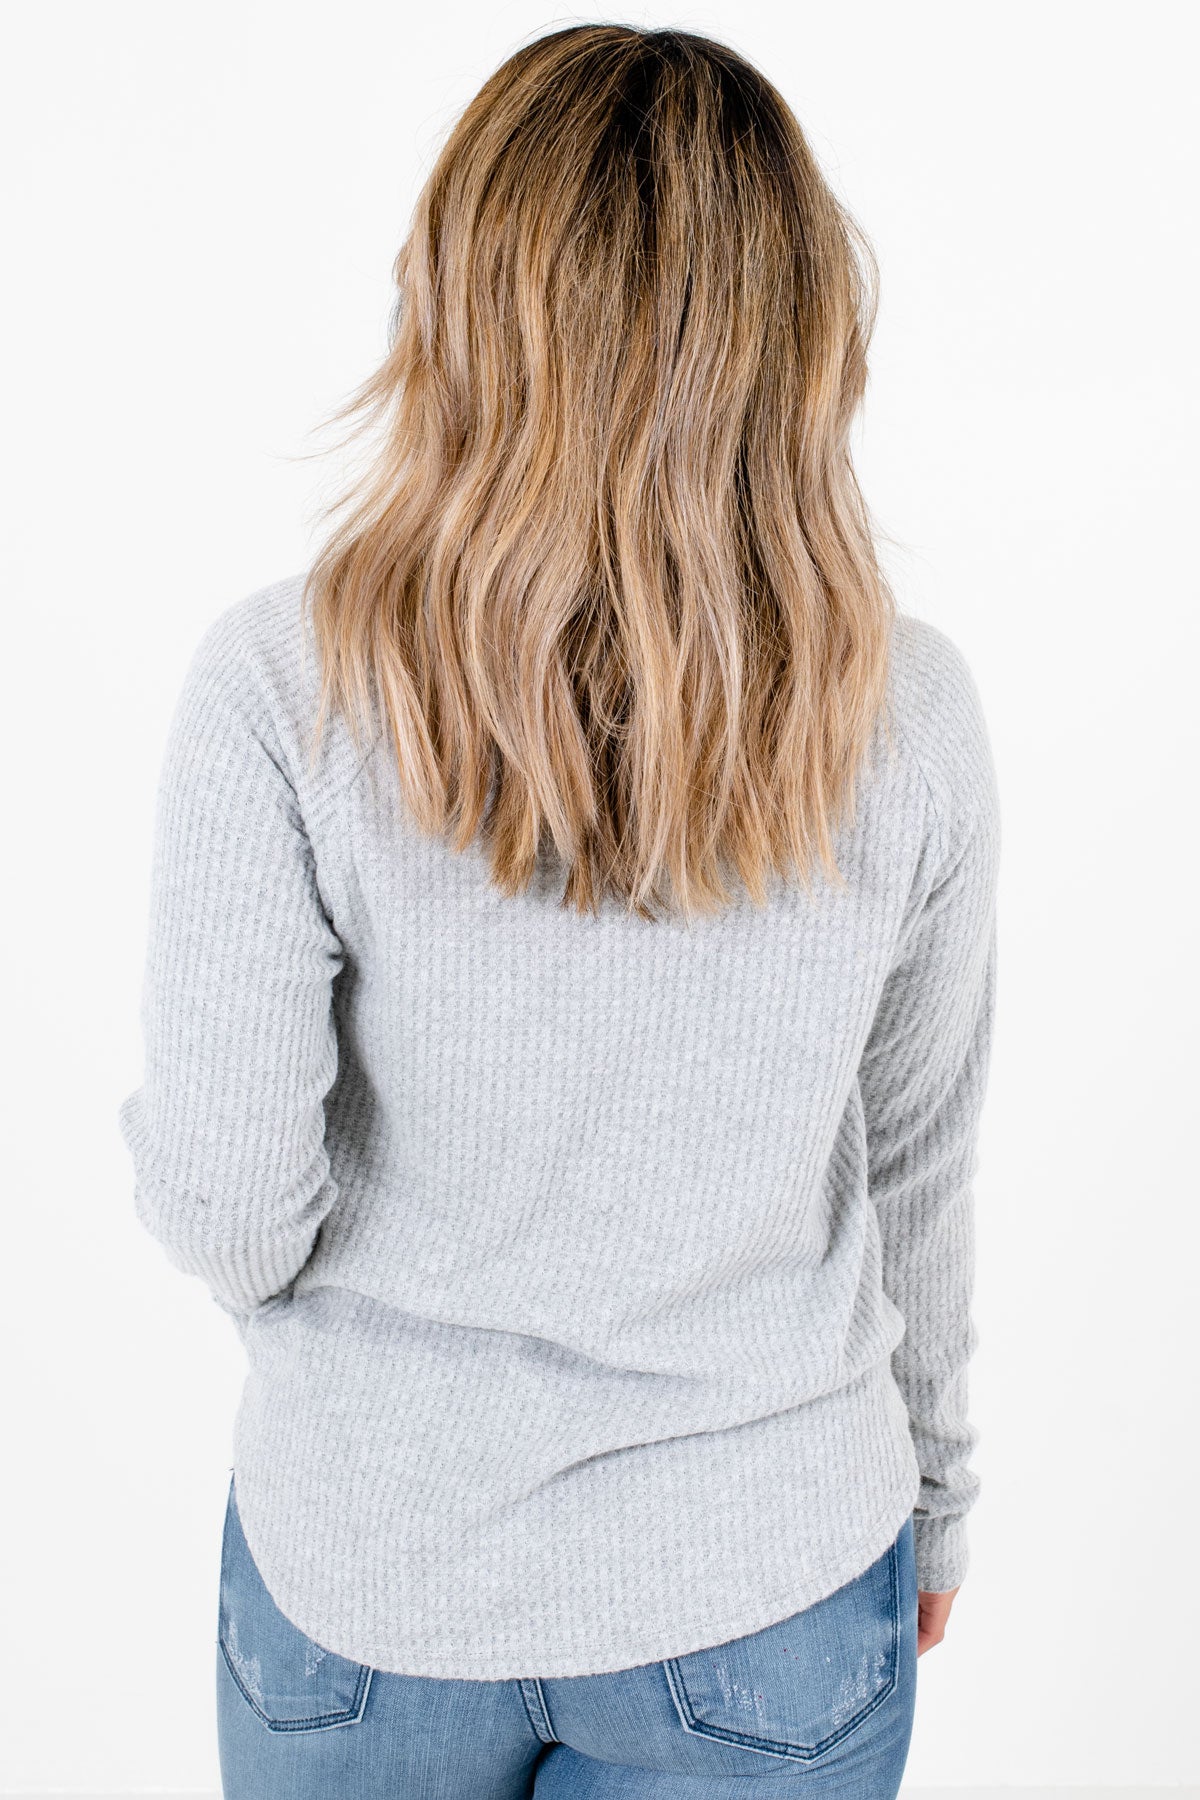 Women’s Gray Cowl Neckline Boutique Sweaters